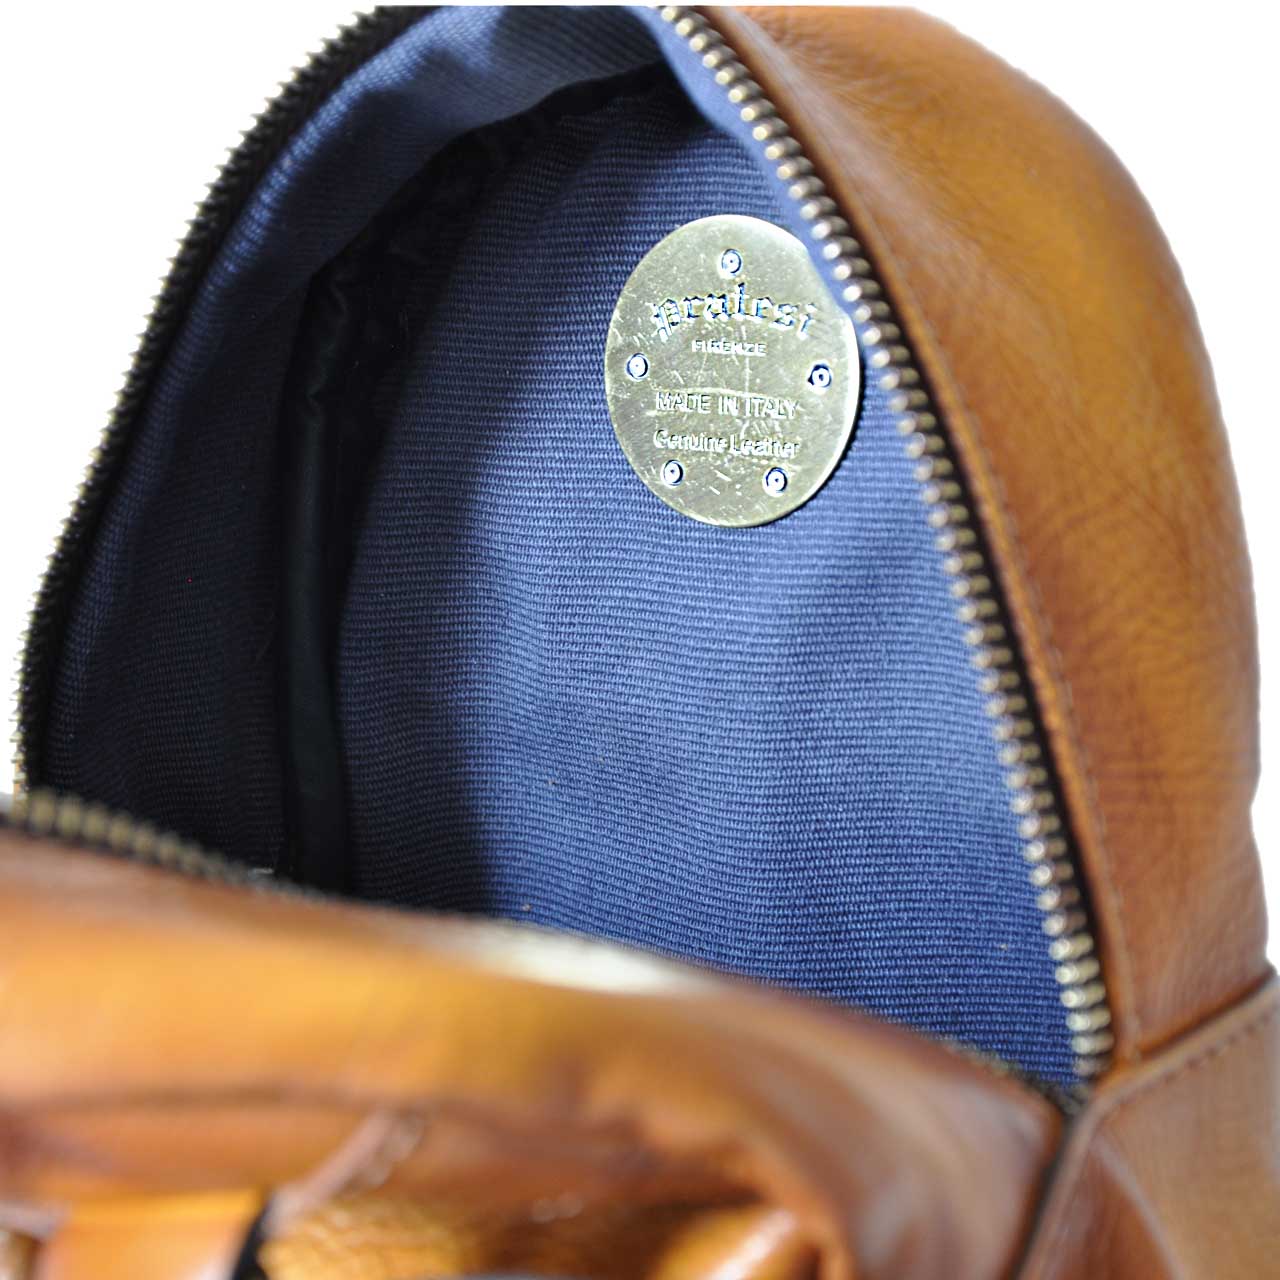 Pratesi Montegiovi Backpack in genuine Italian leather - Vegetable Tanned Italian Leather Cognac